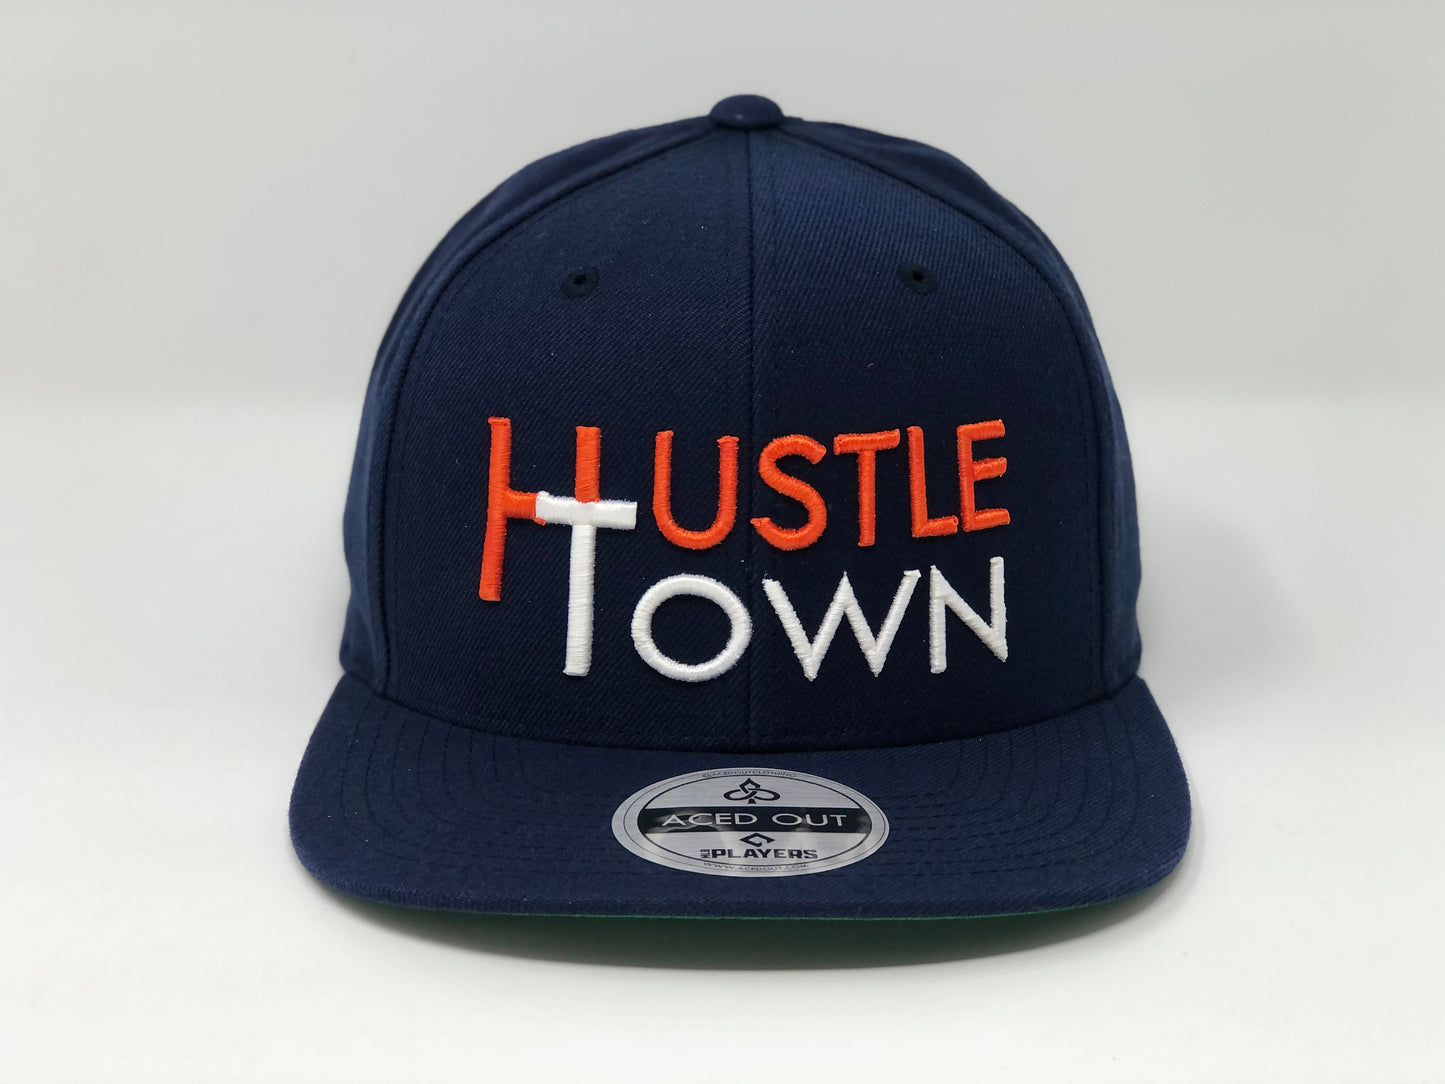 Hustle Town - Navy Snapback